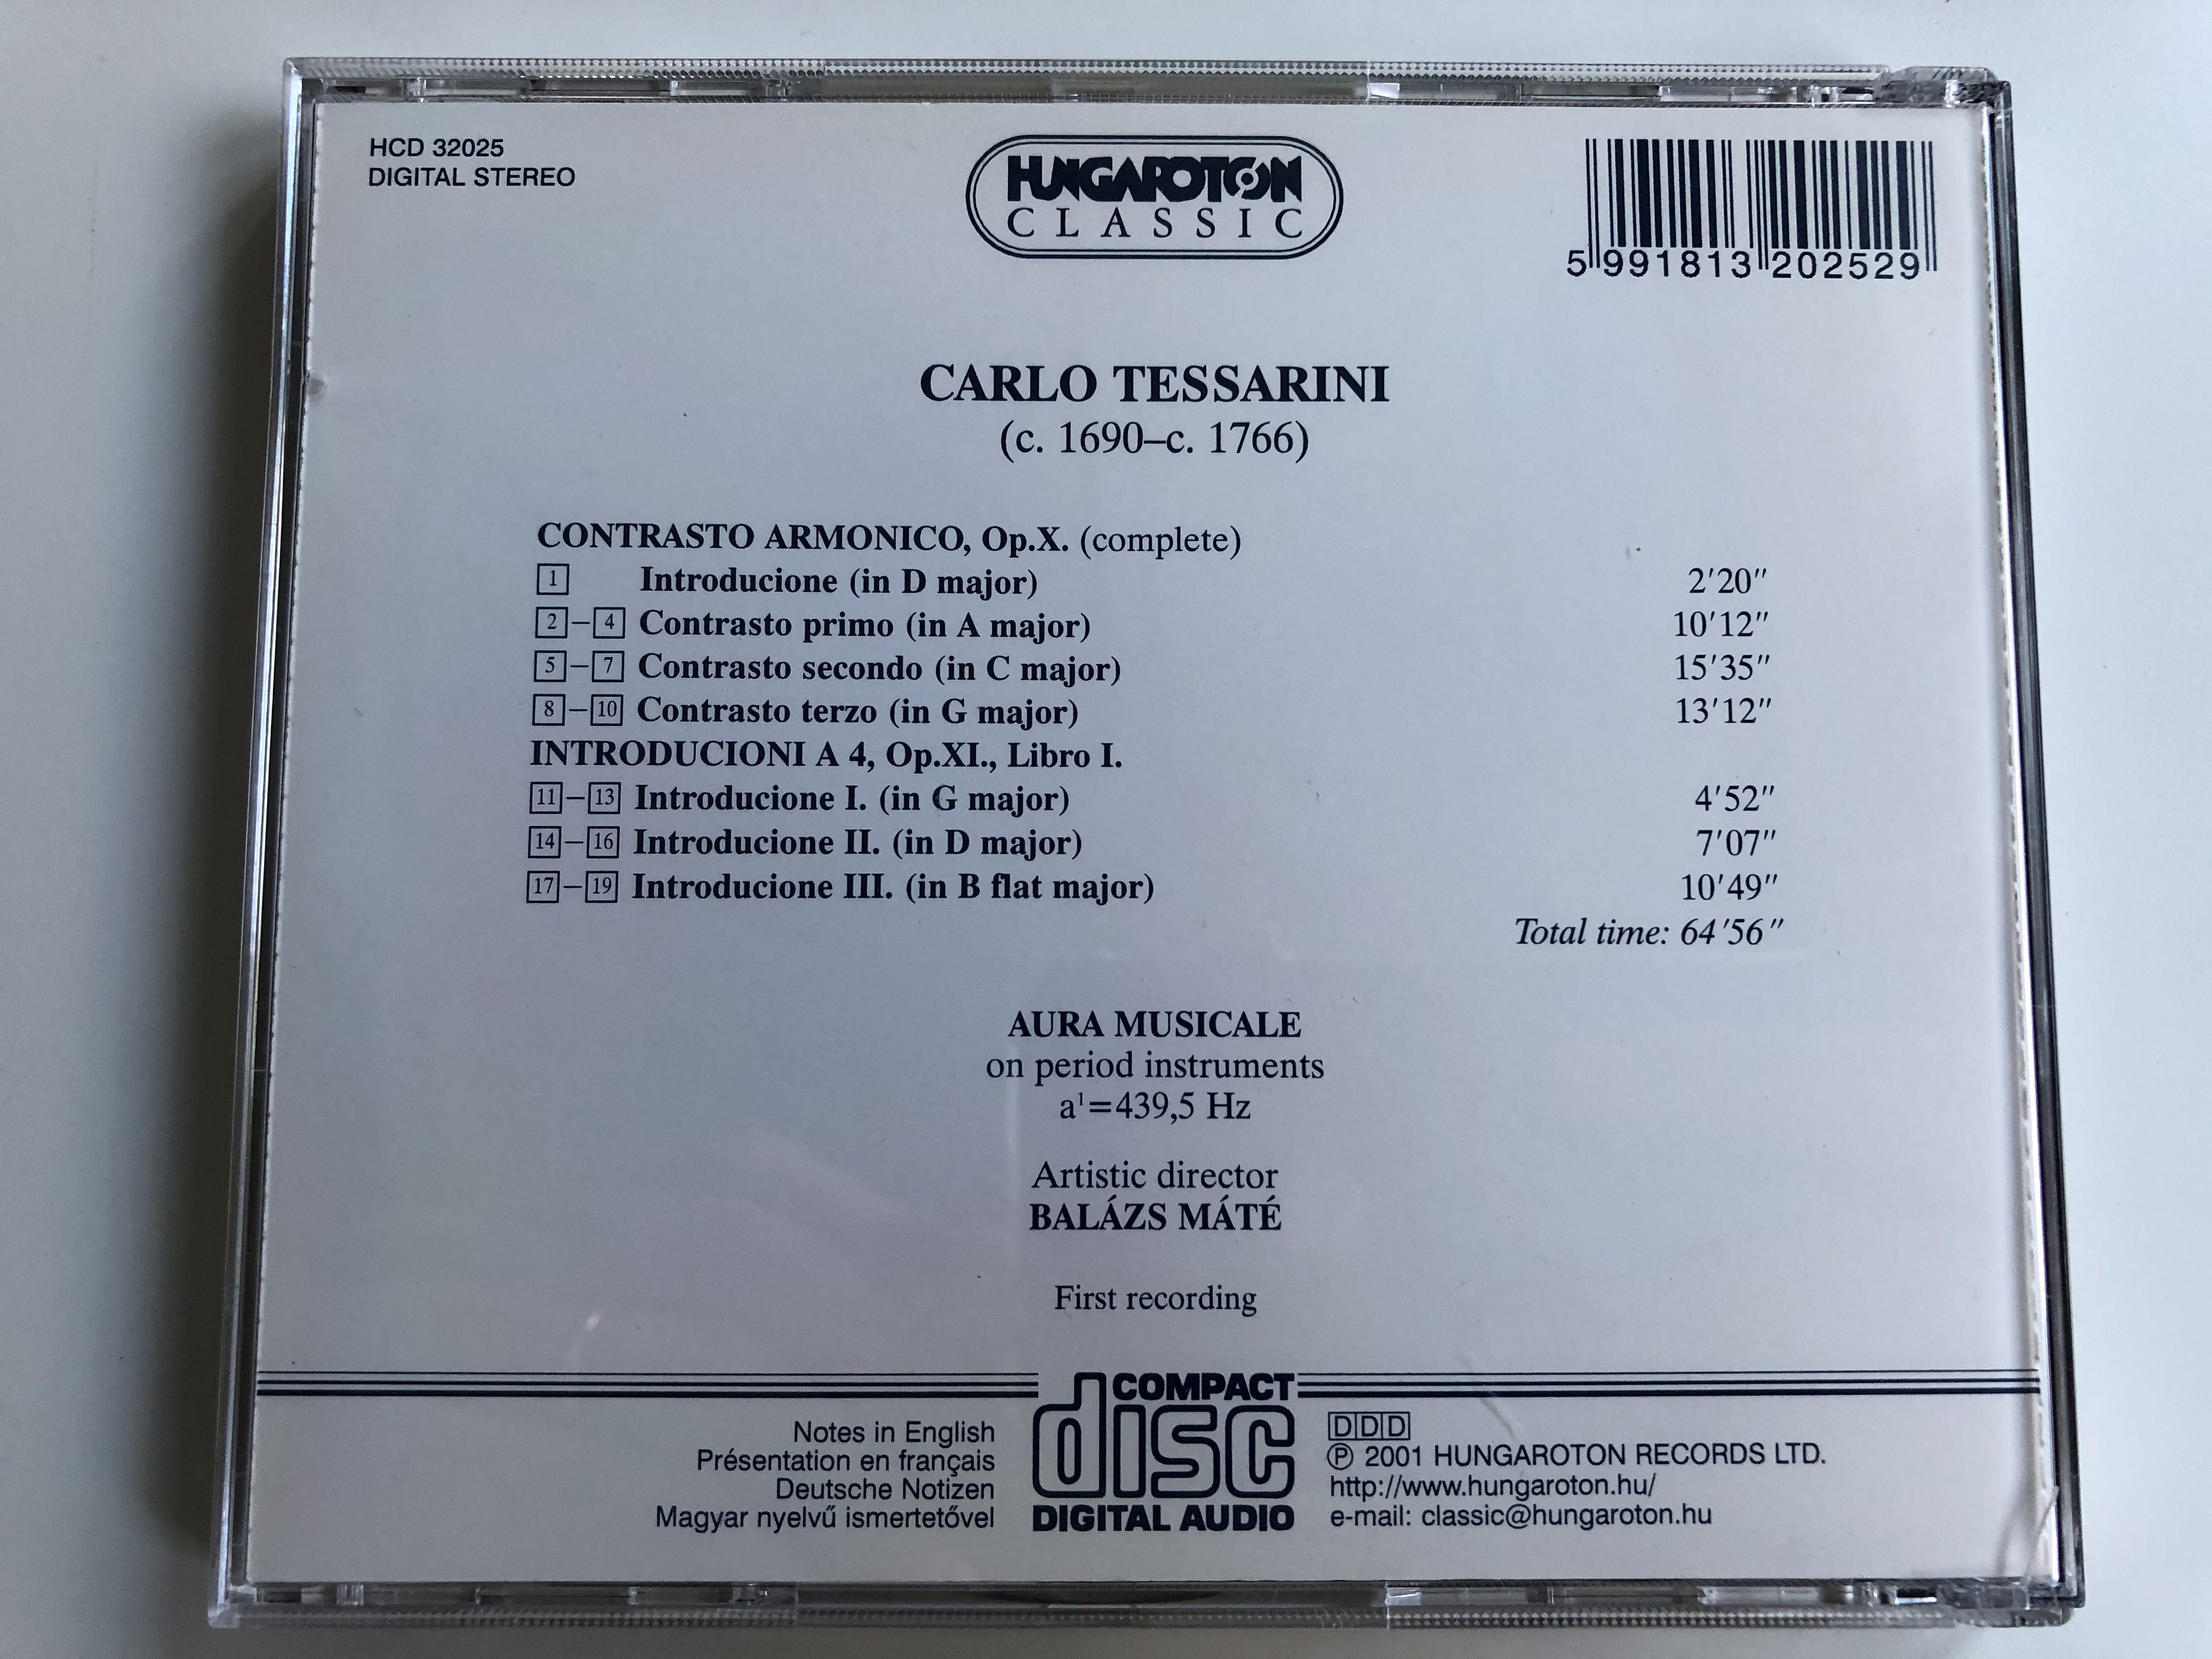 carlo-tessarini-contrasto-armonico-op.x.-introducioni-a-4.-op.xi-libro-i-aura-musicale-on-period-instruments-aristic-director-bal-zs-m-t-hungaroton-classic-audio-cd-2001-stereo-hcd-8-.jpg